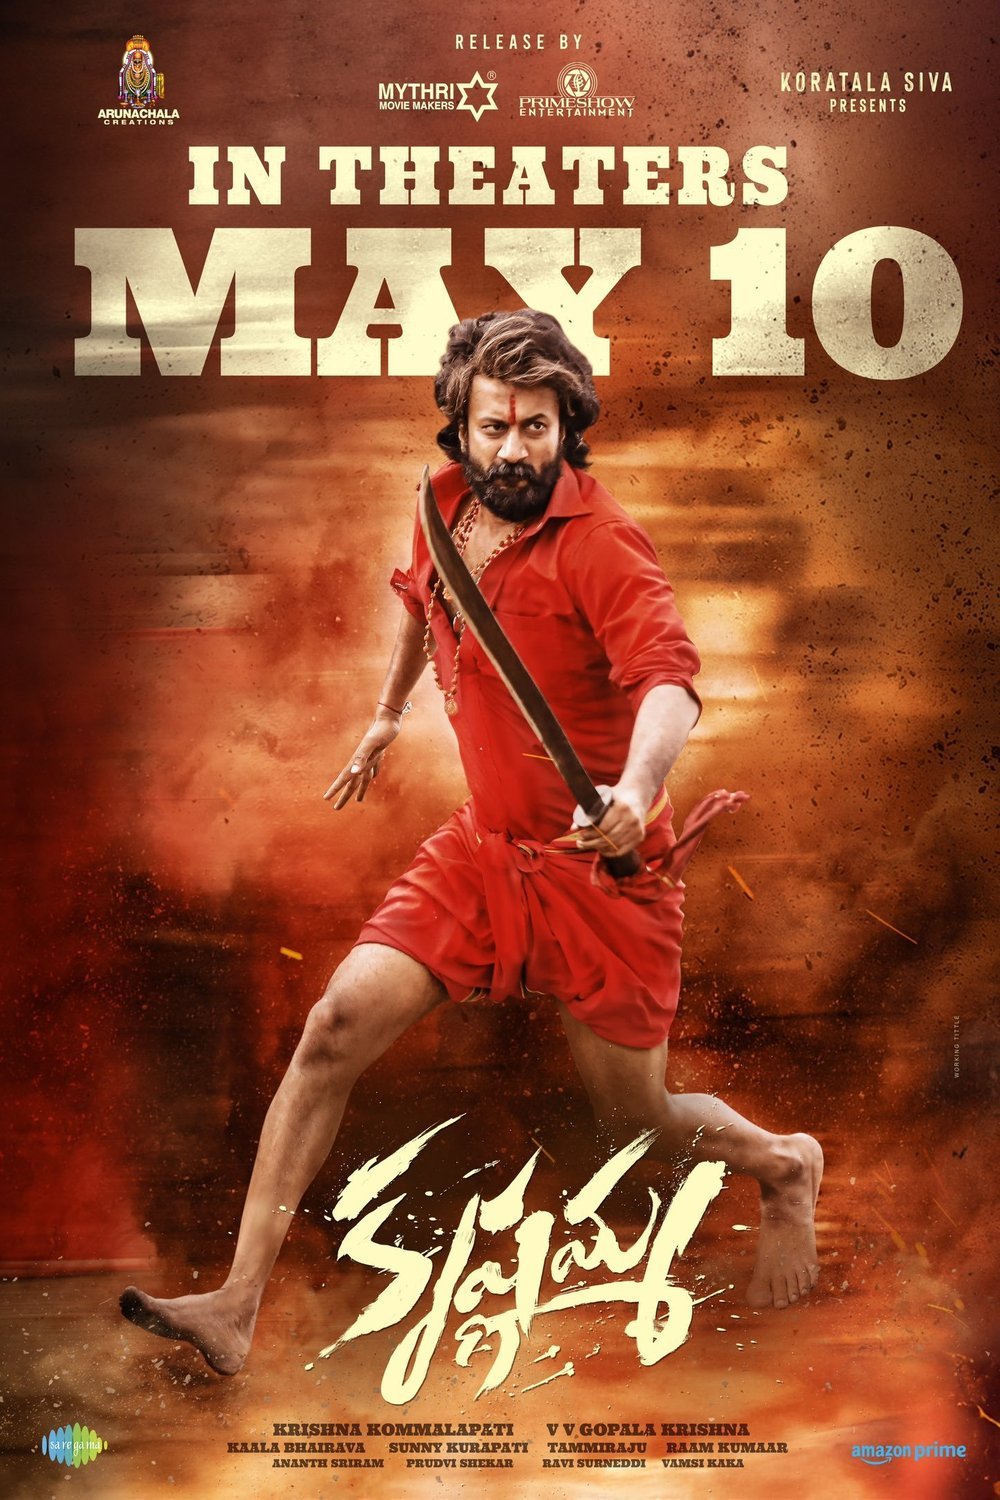 Telugu poster of the movie Krishnamma